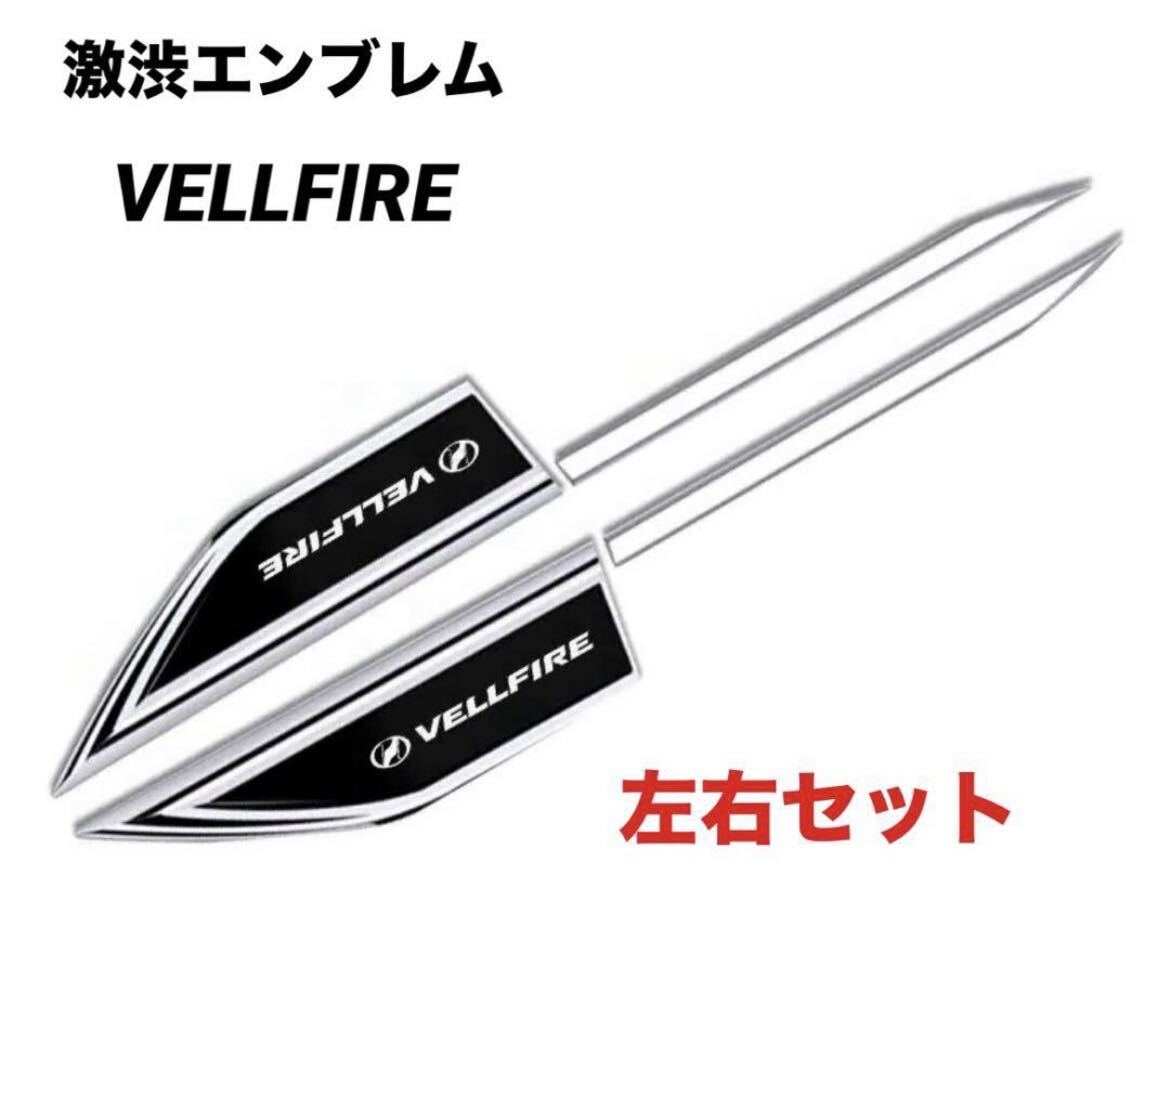 *VELLFIRE* Vellfire 30 40* emblem * black × silver * left right * new goods *